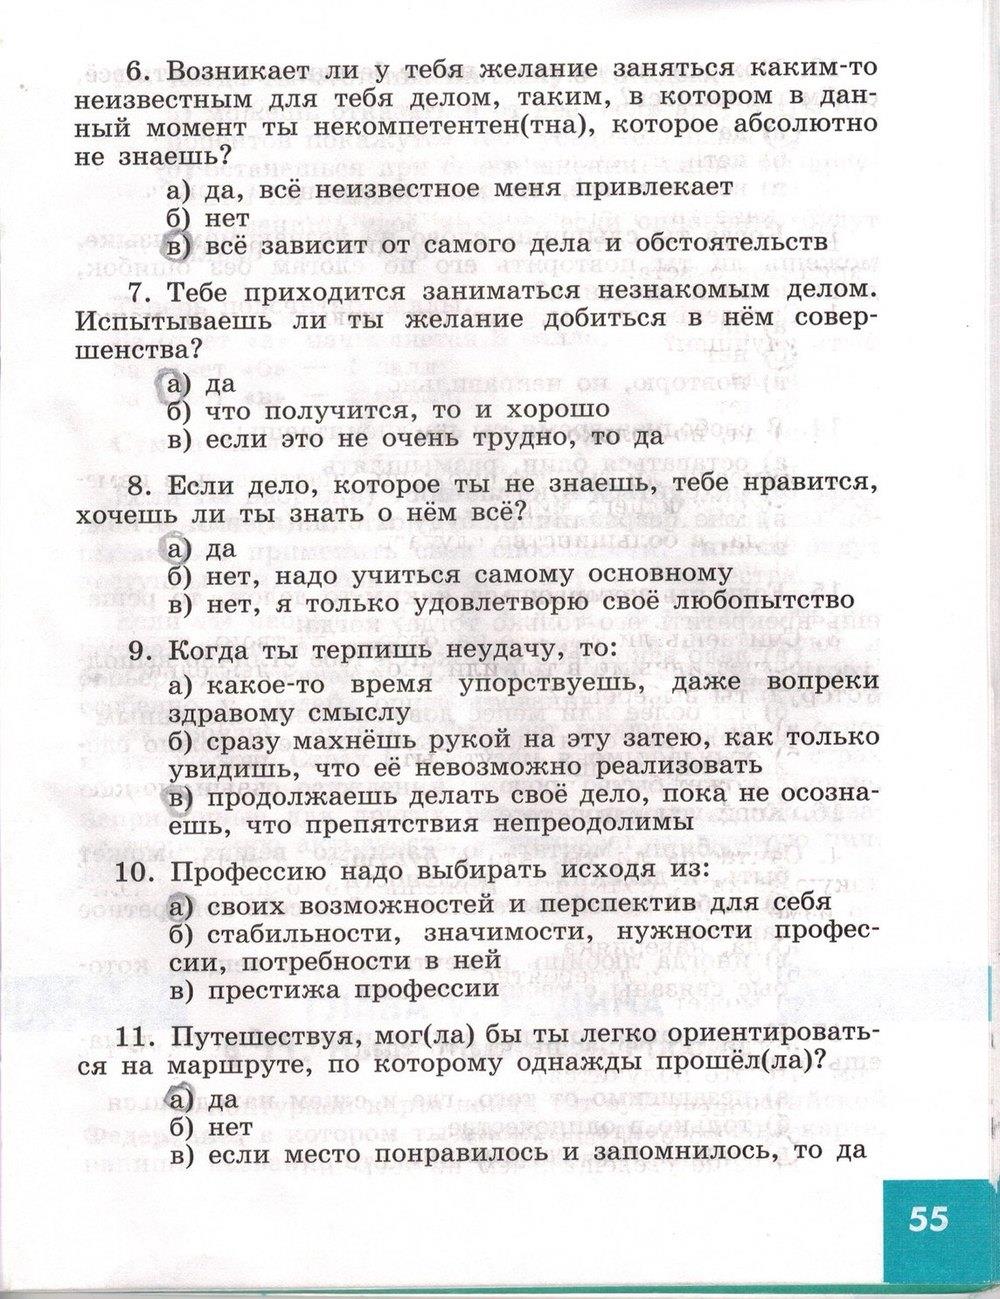 гдз 5 класс рабочая тетрадь страница 55 обществознание Иванова, Хотеенкова